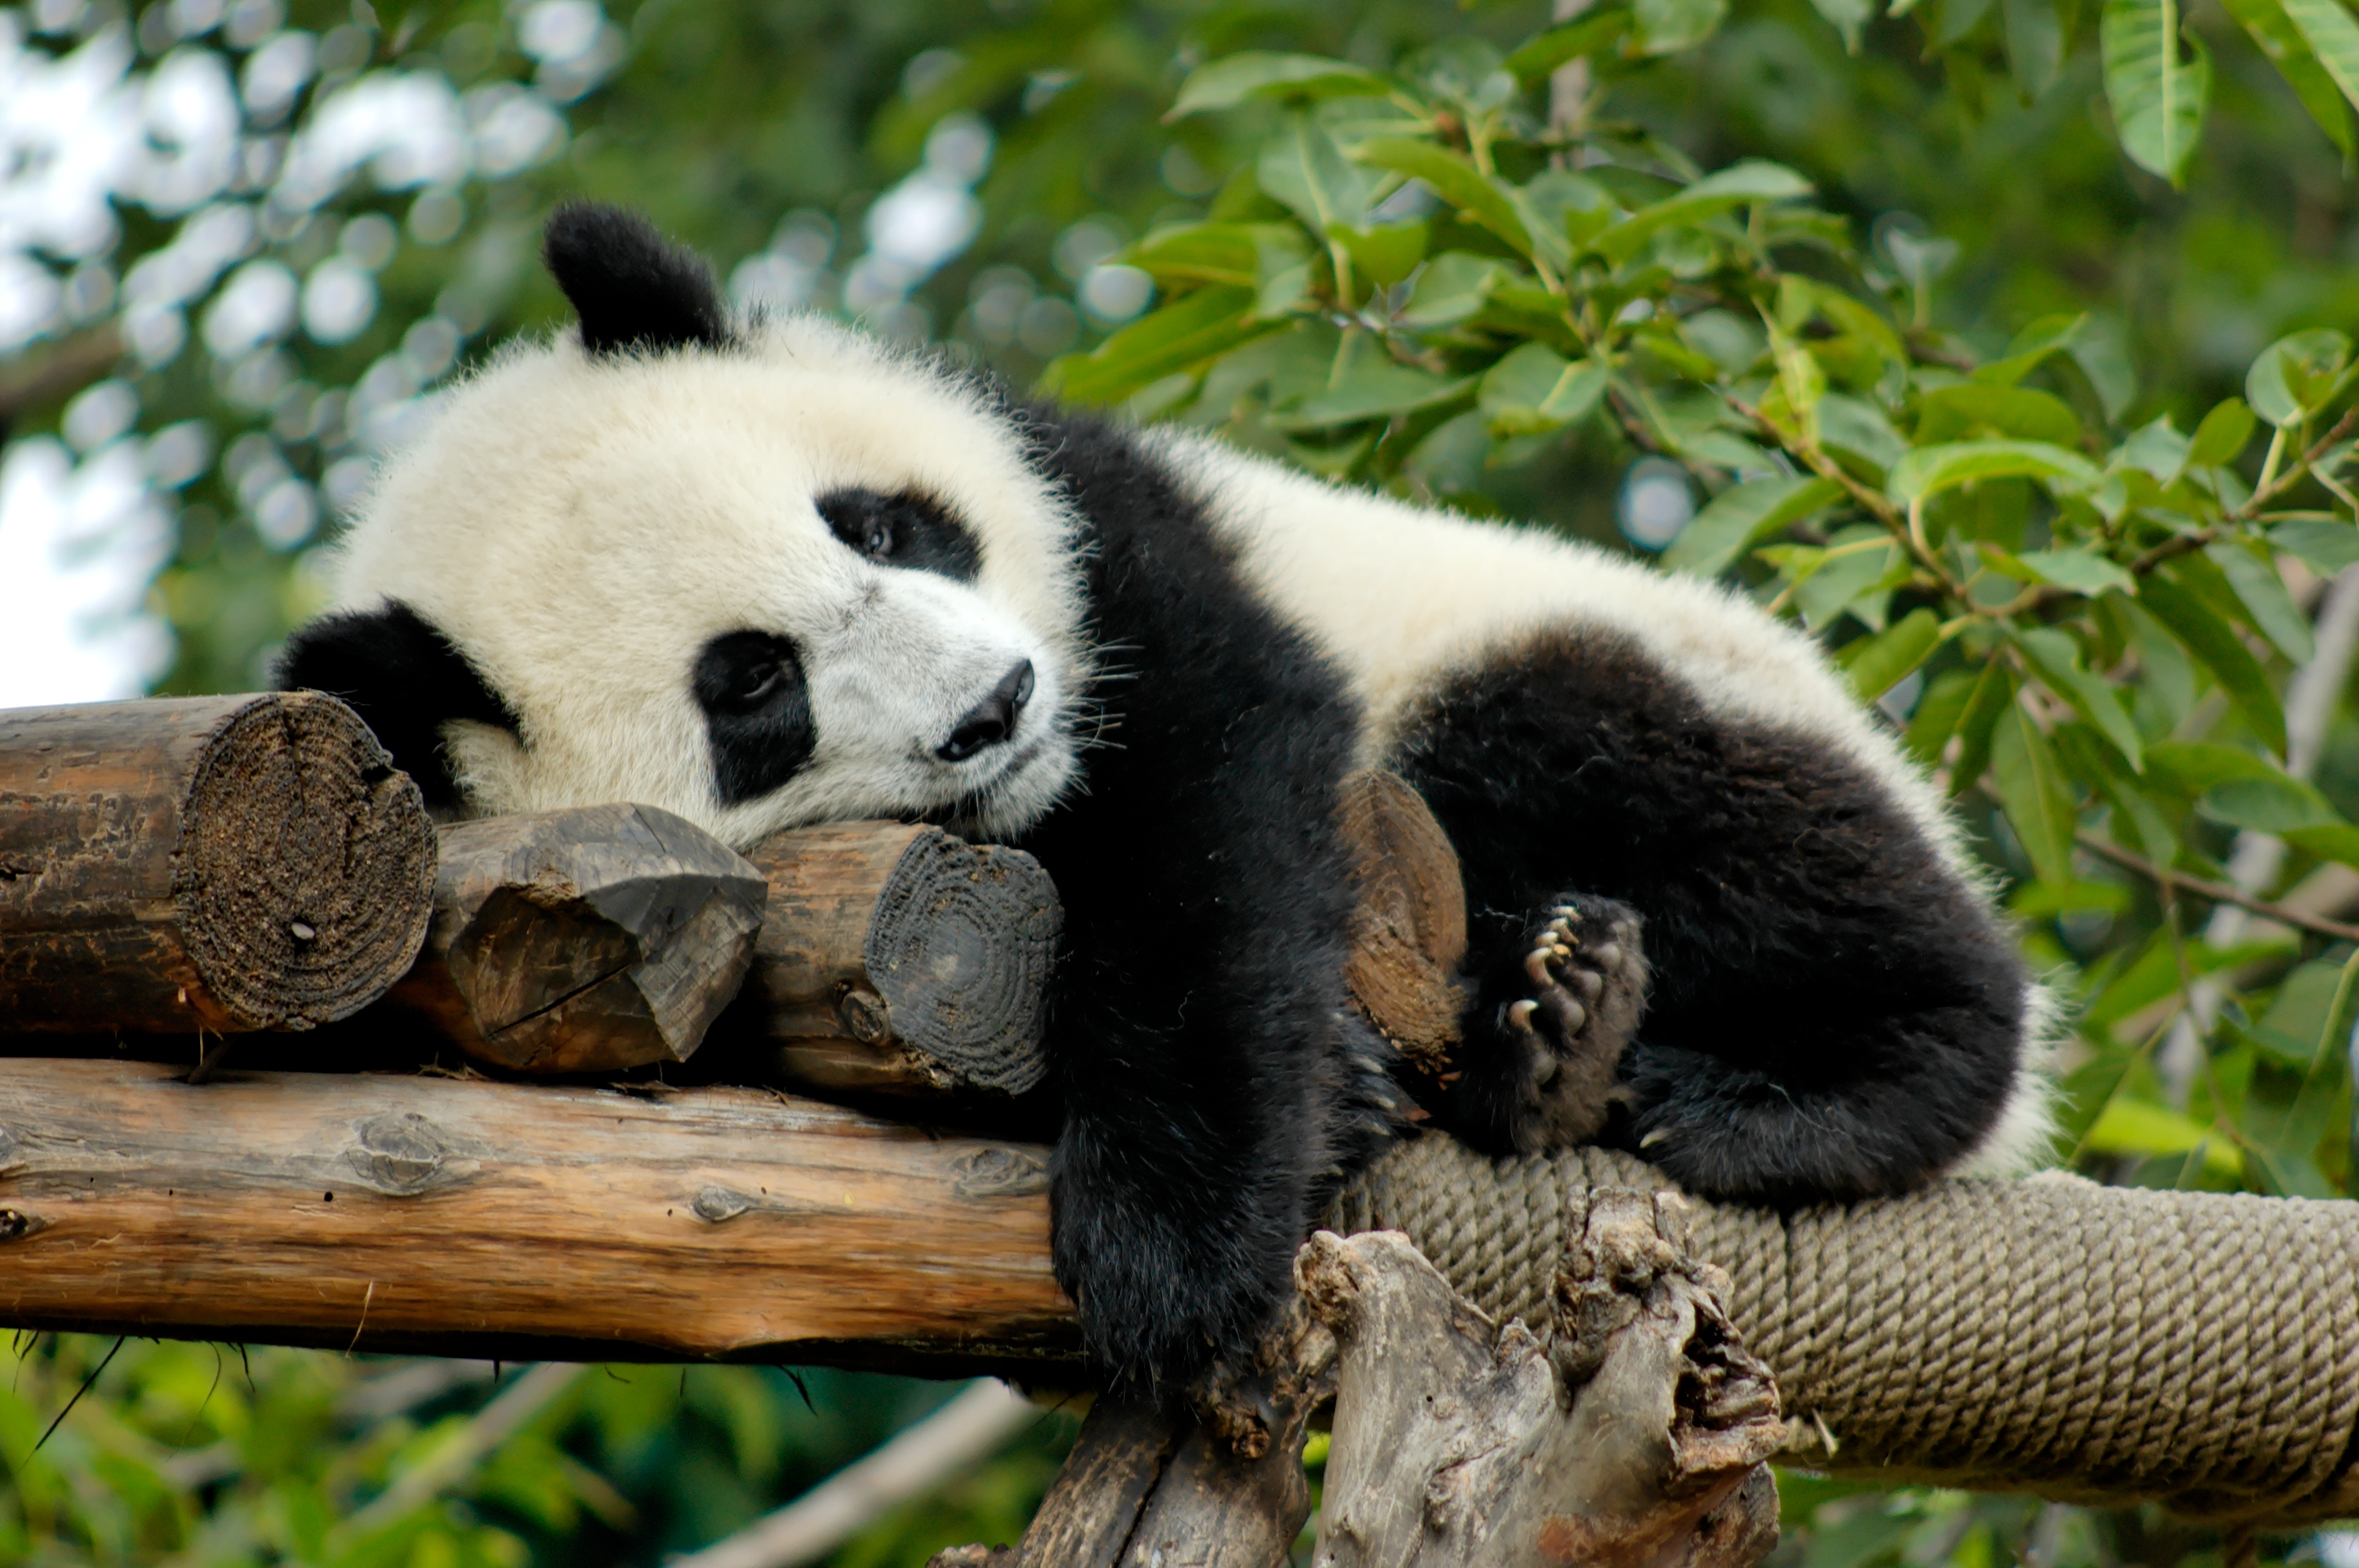 Panda Sleeping - Serious Facts